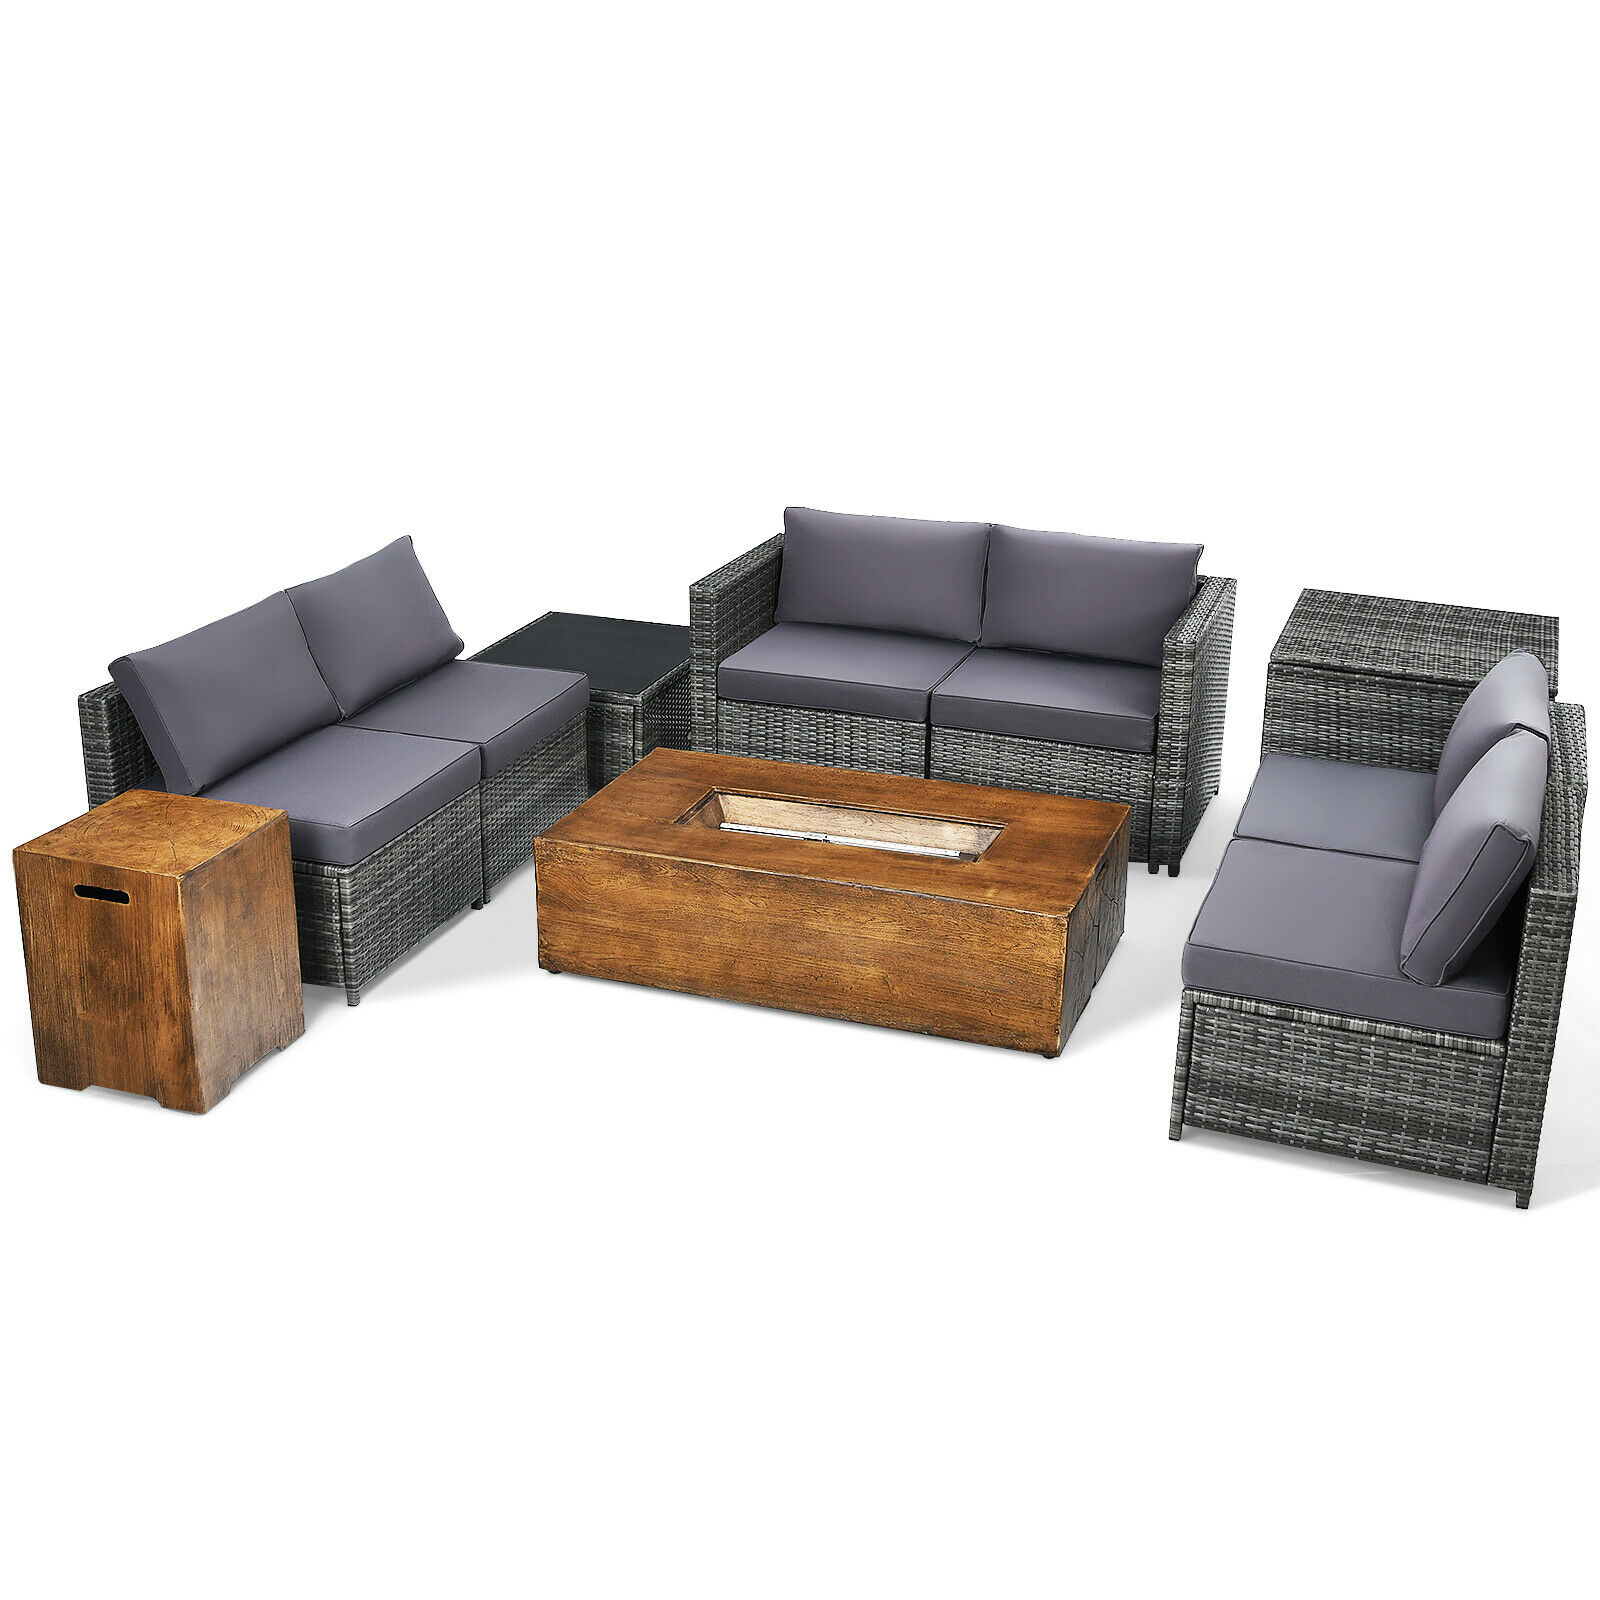 Topbuy Patiojoy 10 PCS Outdoor Rattan Furniture Set Sectional Sofa Set w/50,000 BTU Fir Pit Table Tank Holder & Cover